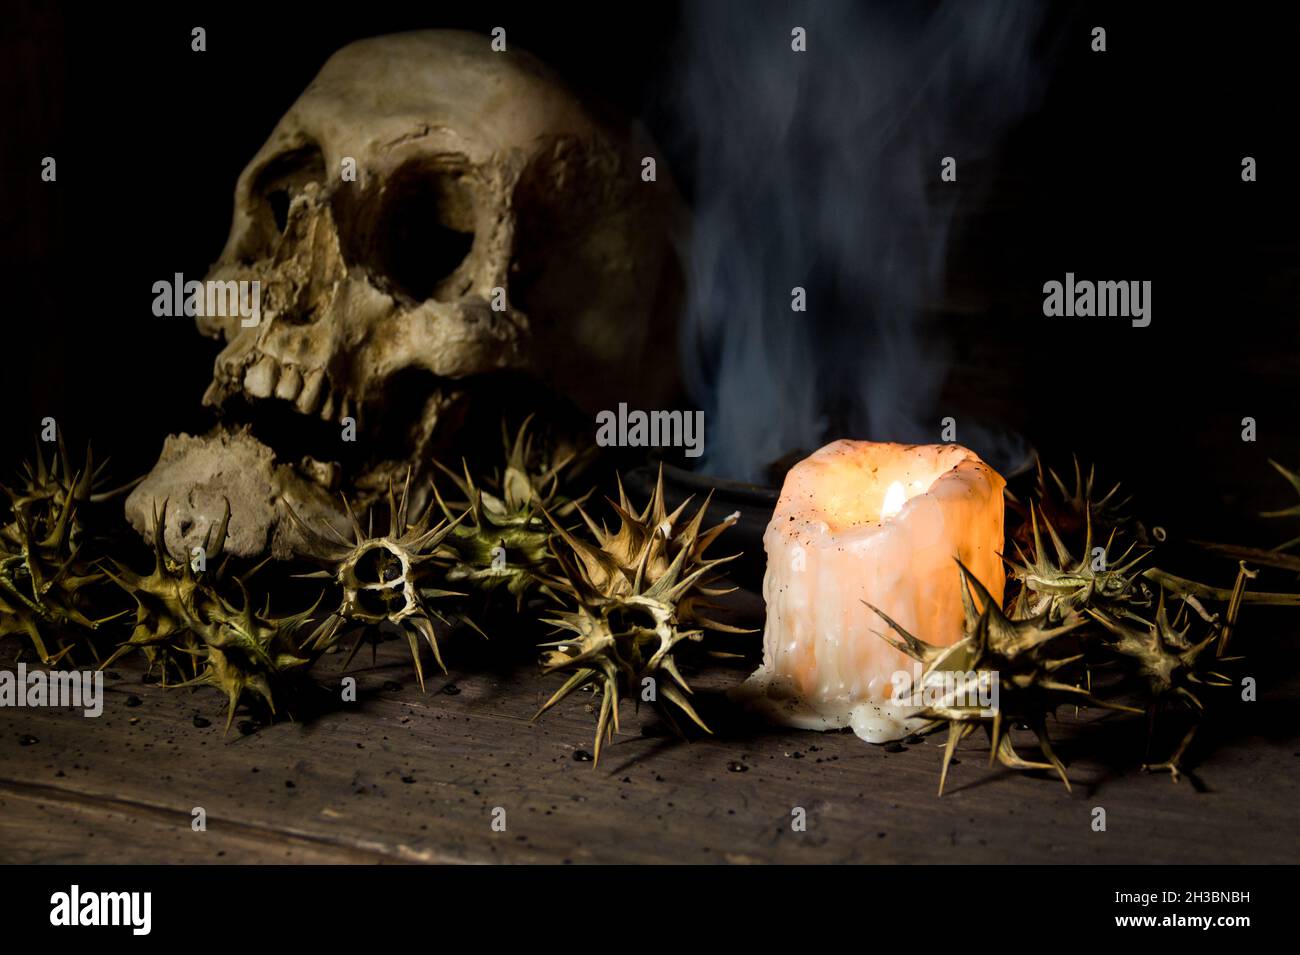 burundanga fruits and seeds with a human skull fire and smoke Stock Photo